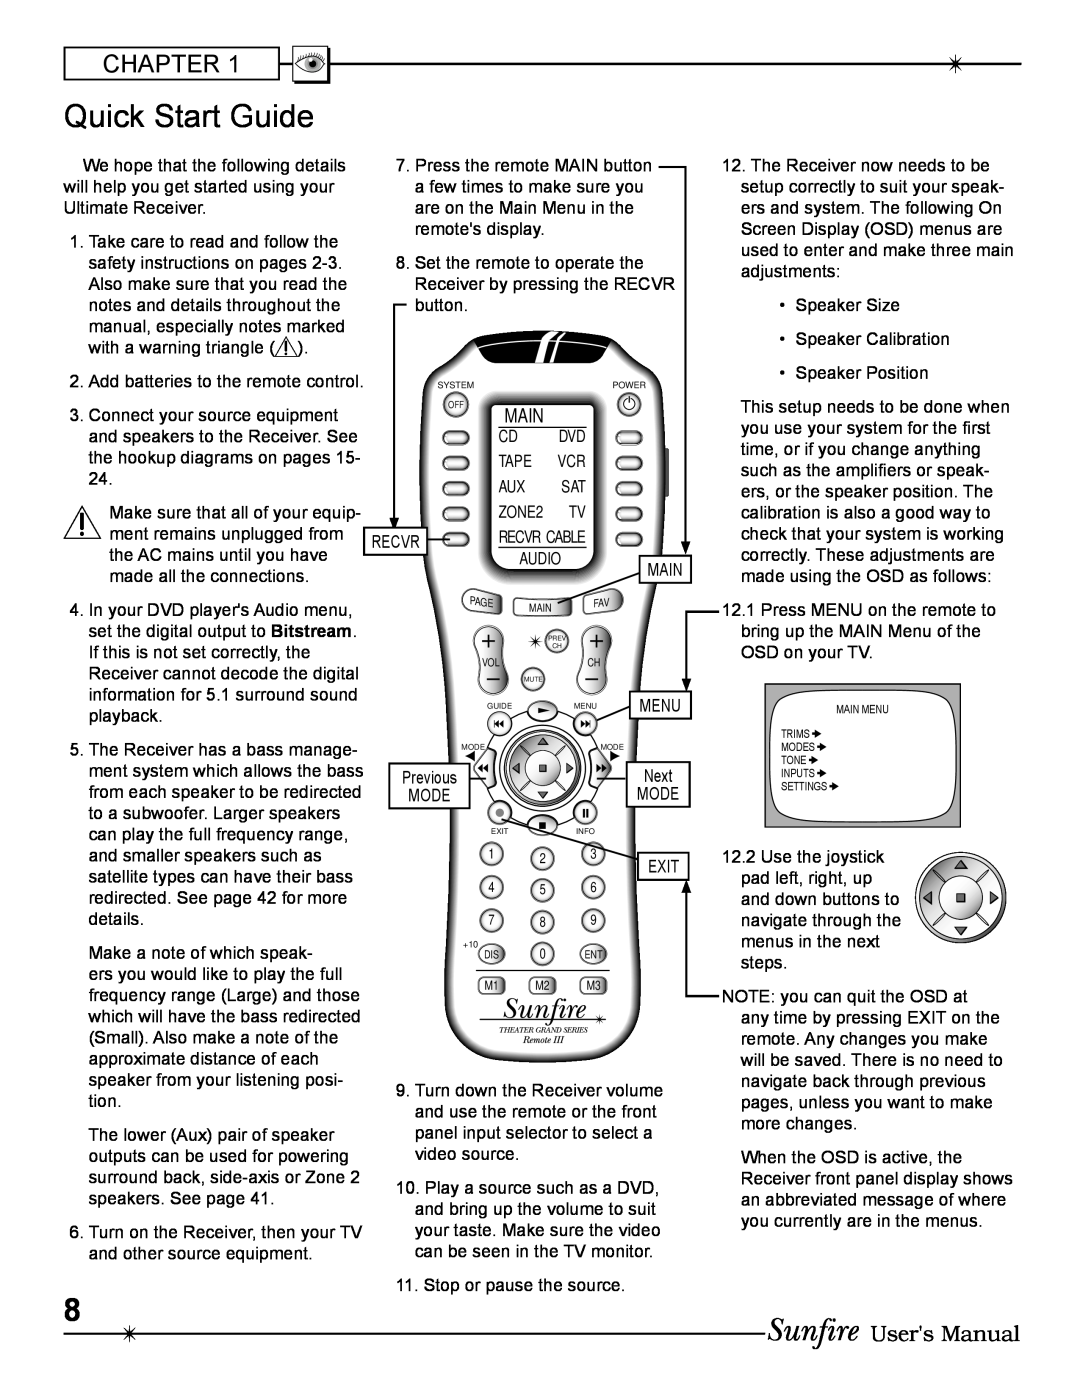 Sunfire Radio manual Quick Start Guide, Main 